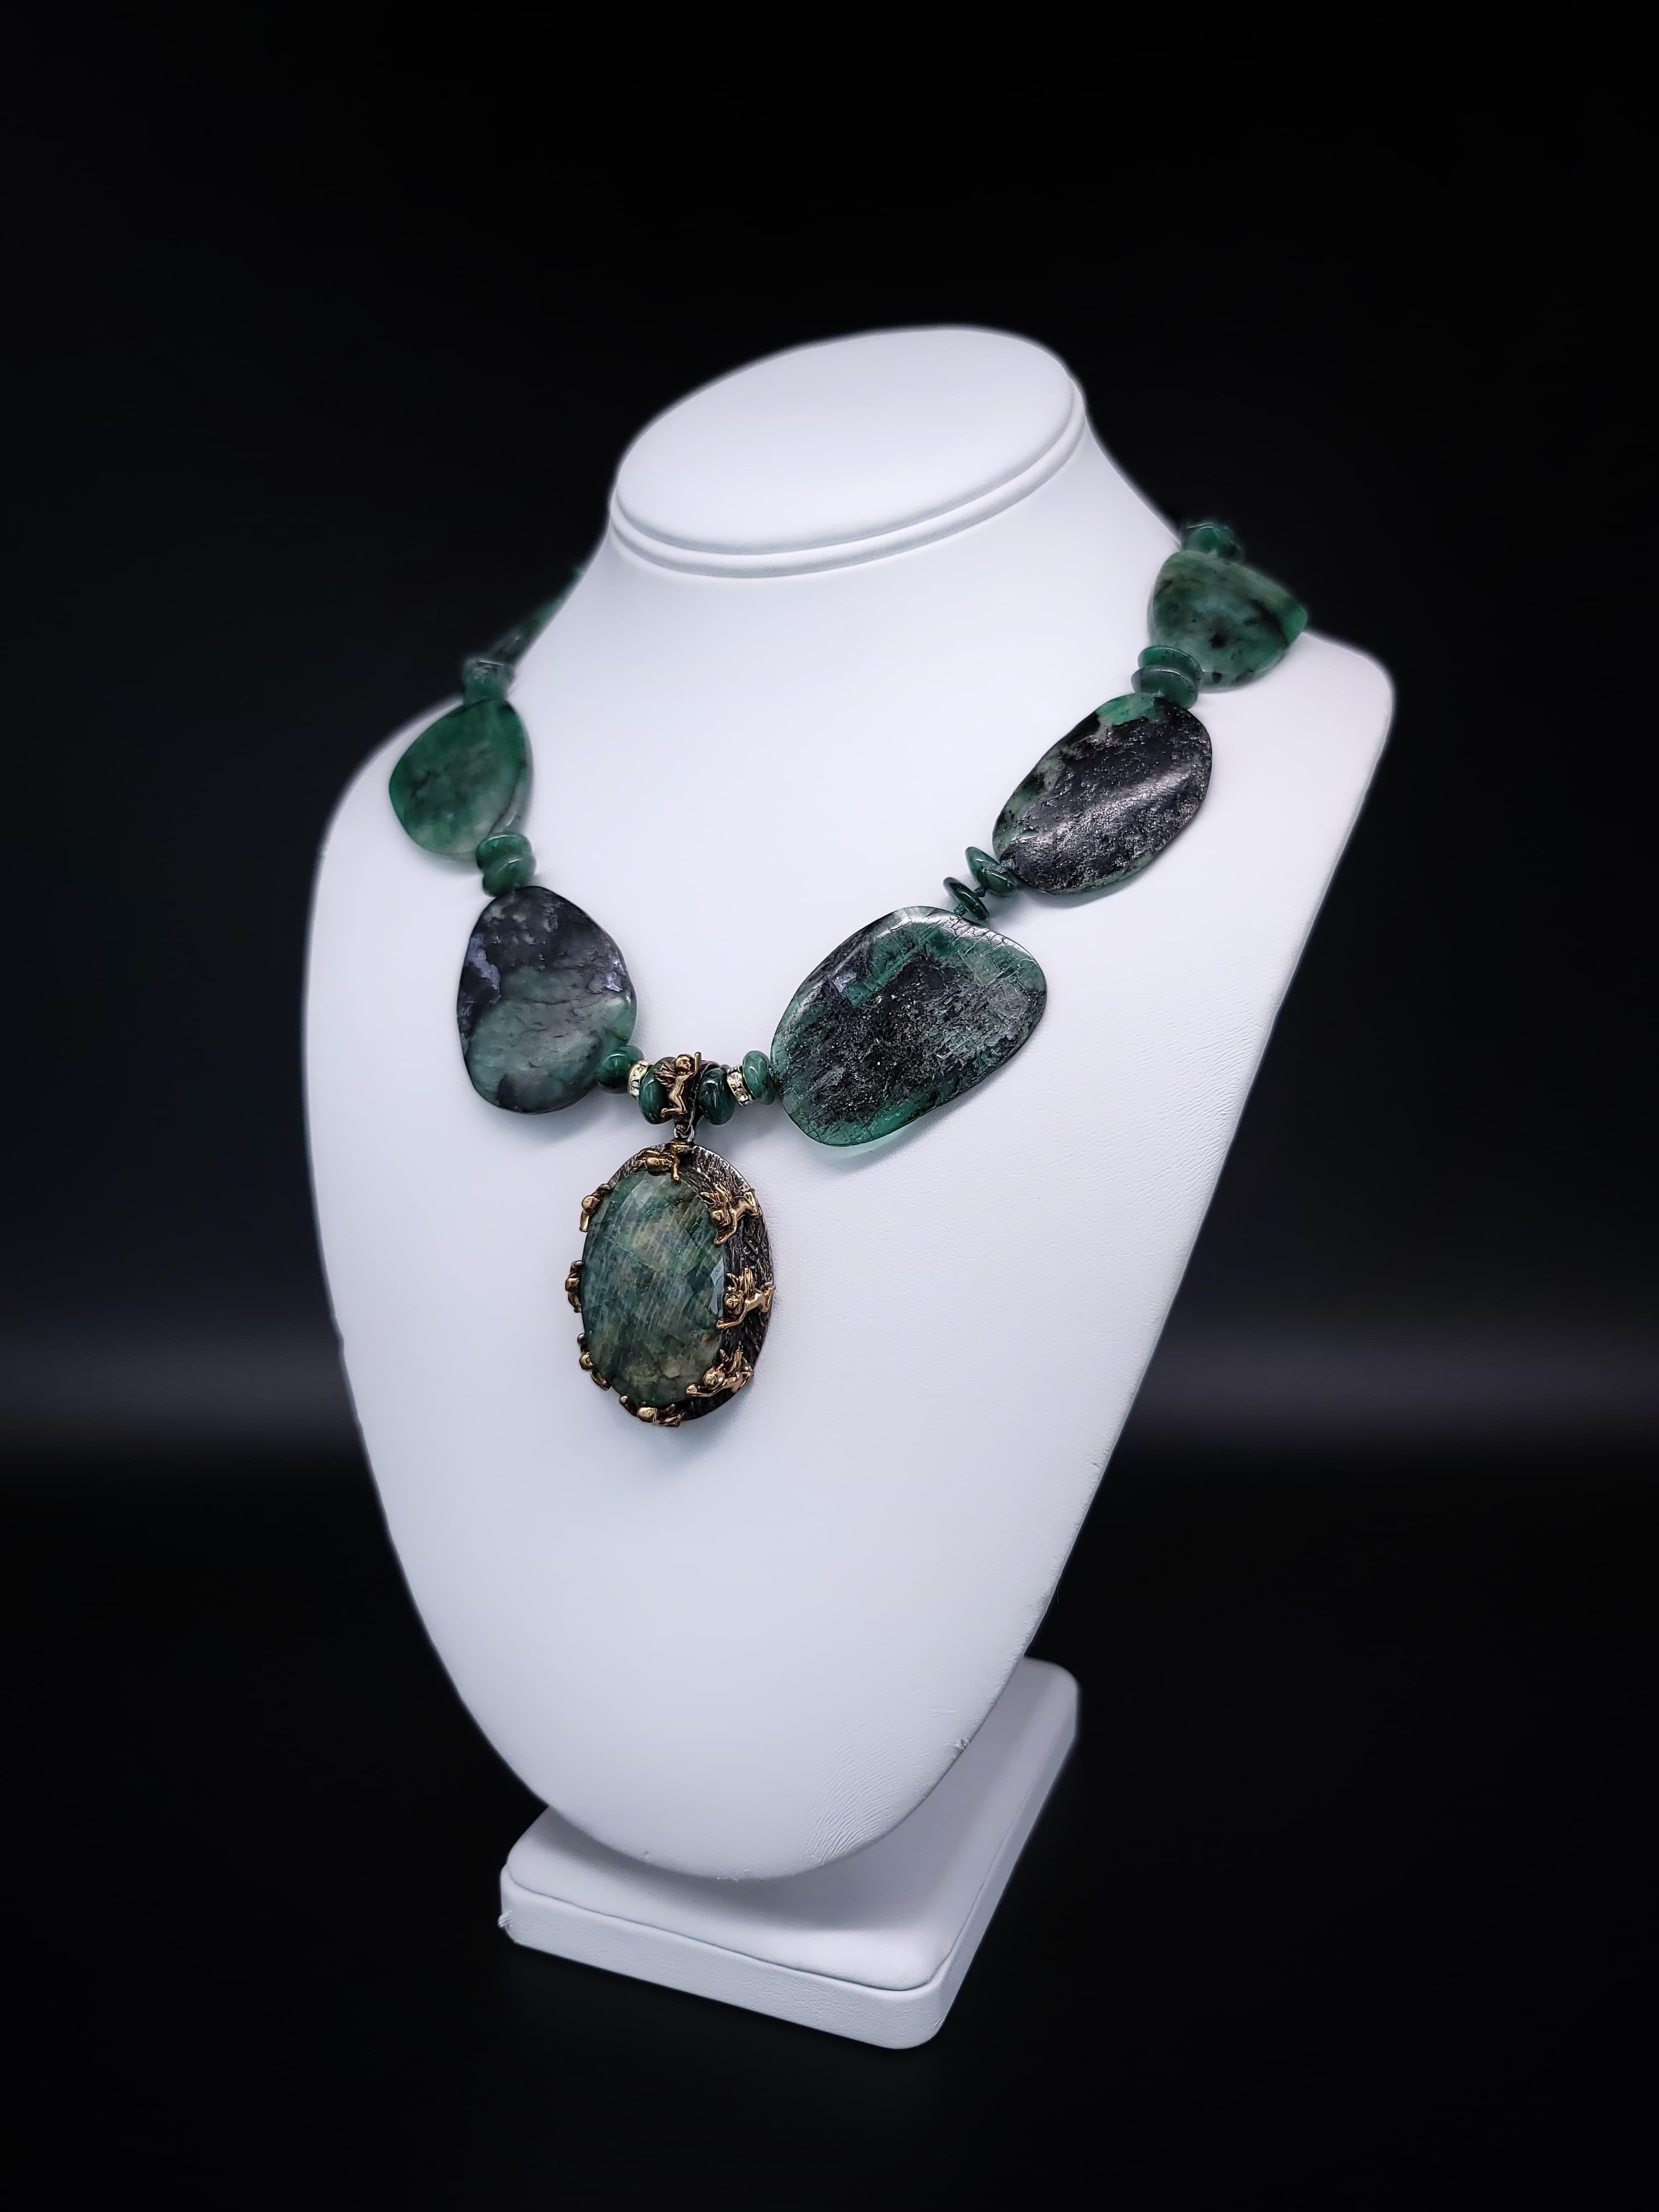 Mixed Cut A.jeschel Stunning Emerald pendant Necklace. For Sale